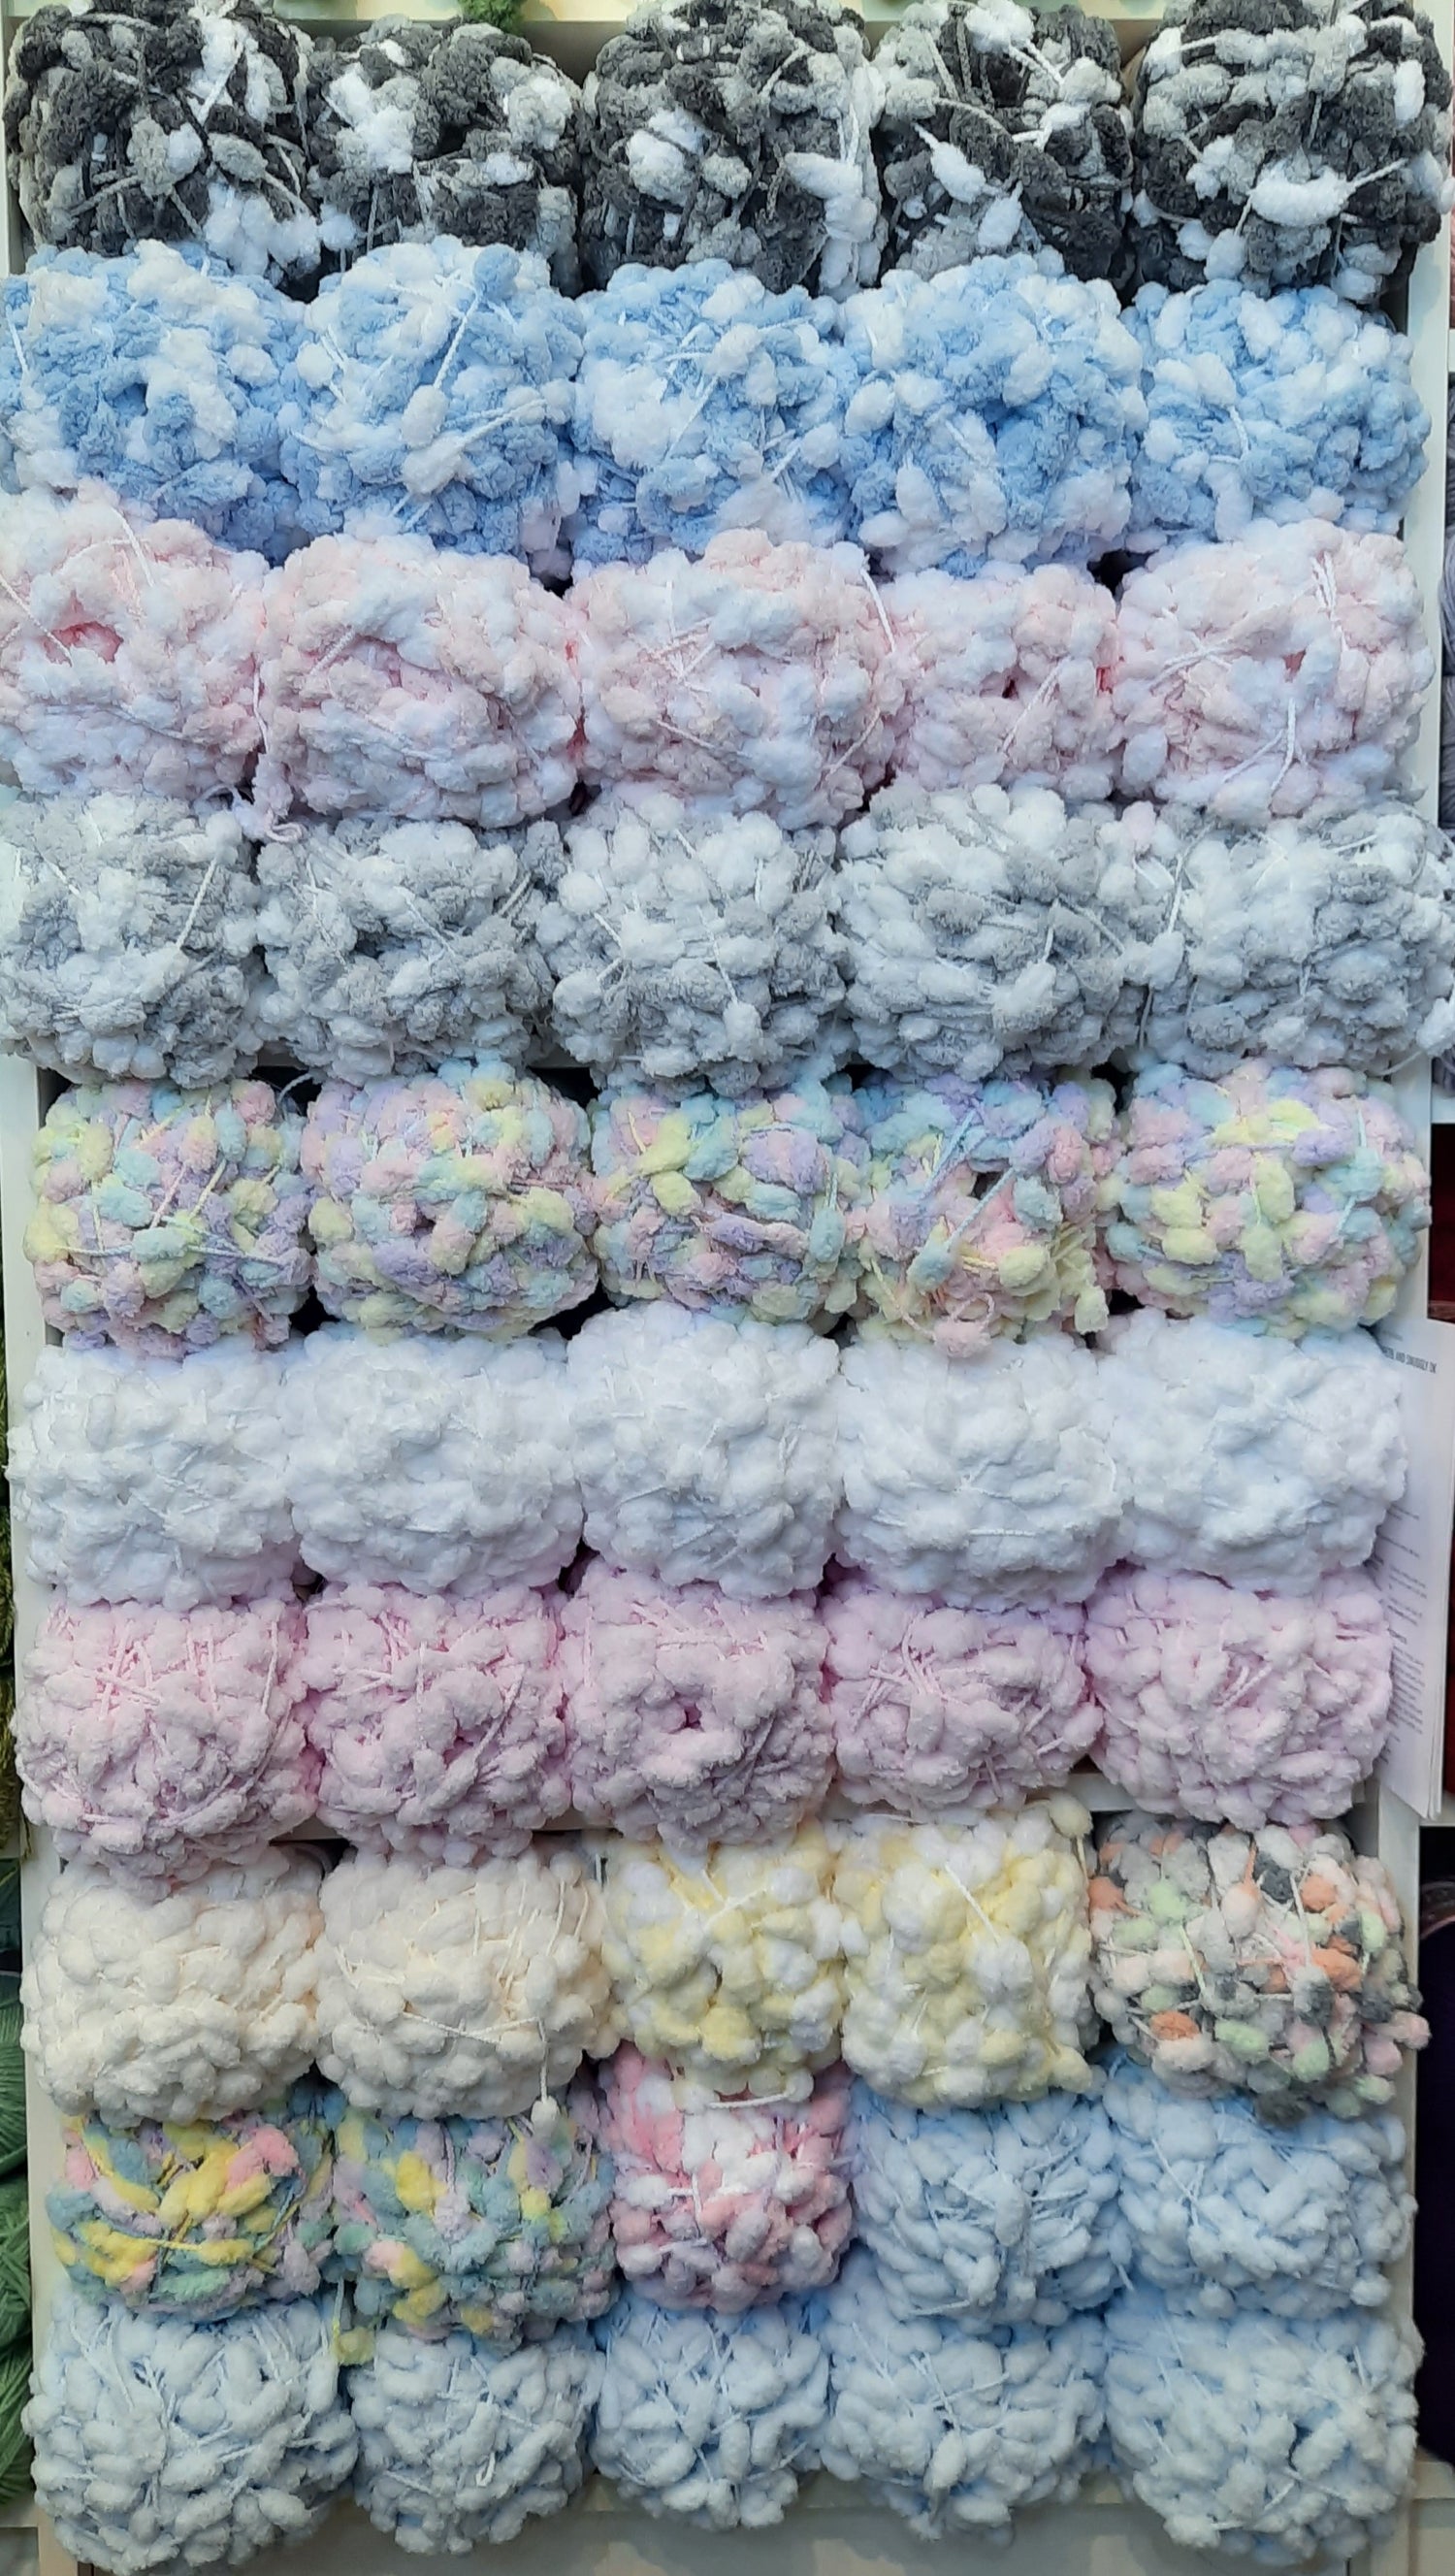 Pompom yarn